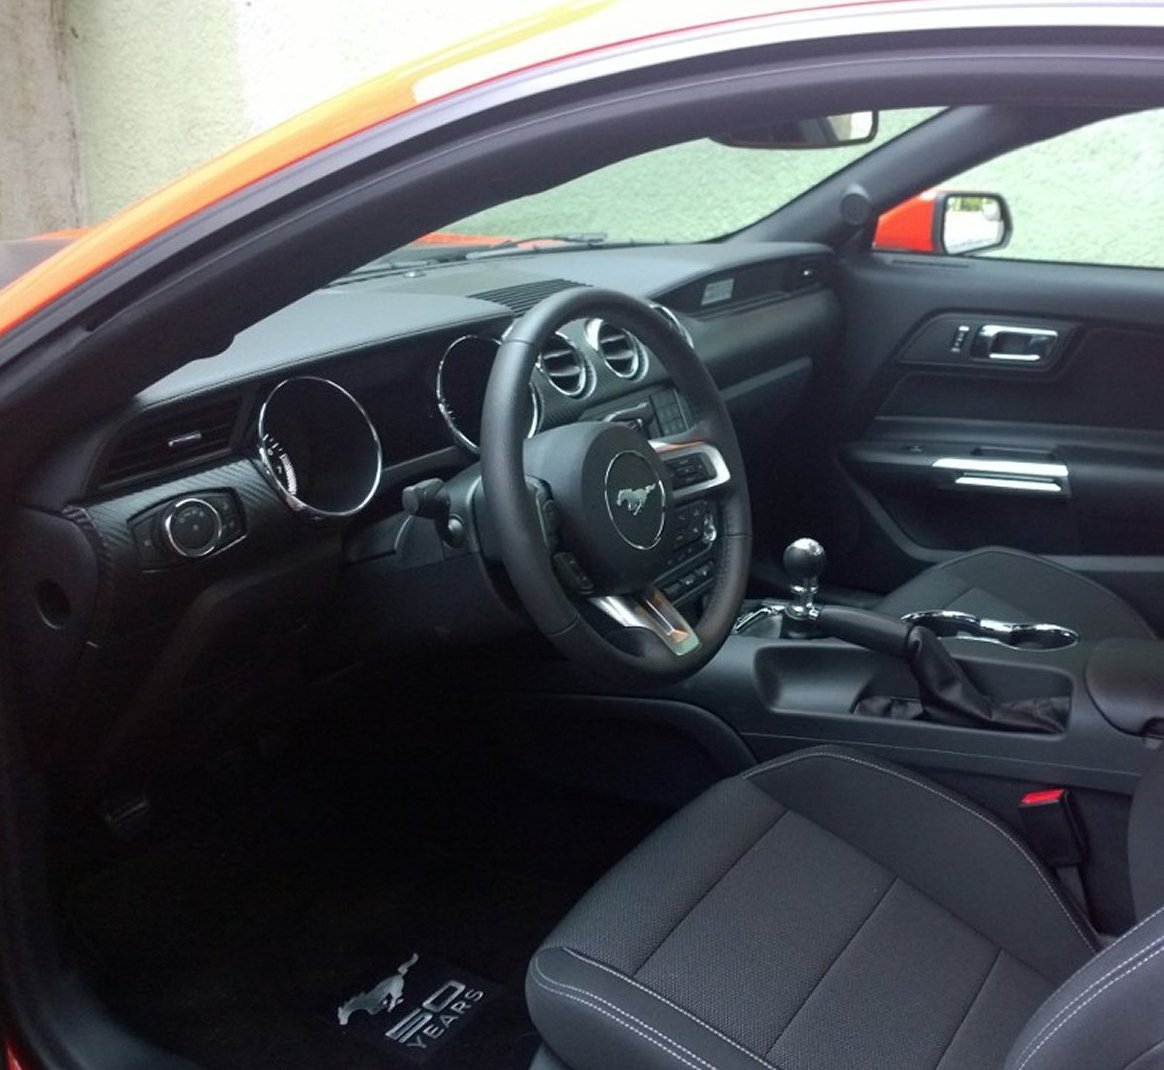 2015 Orange Mustang Interior.jpg